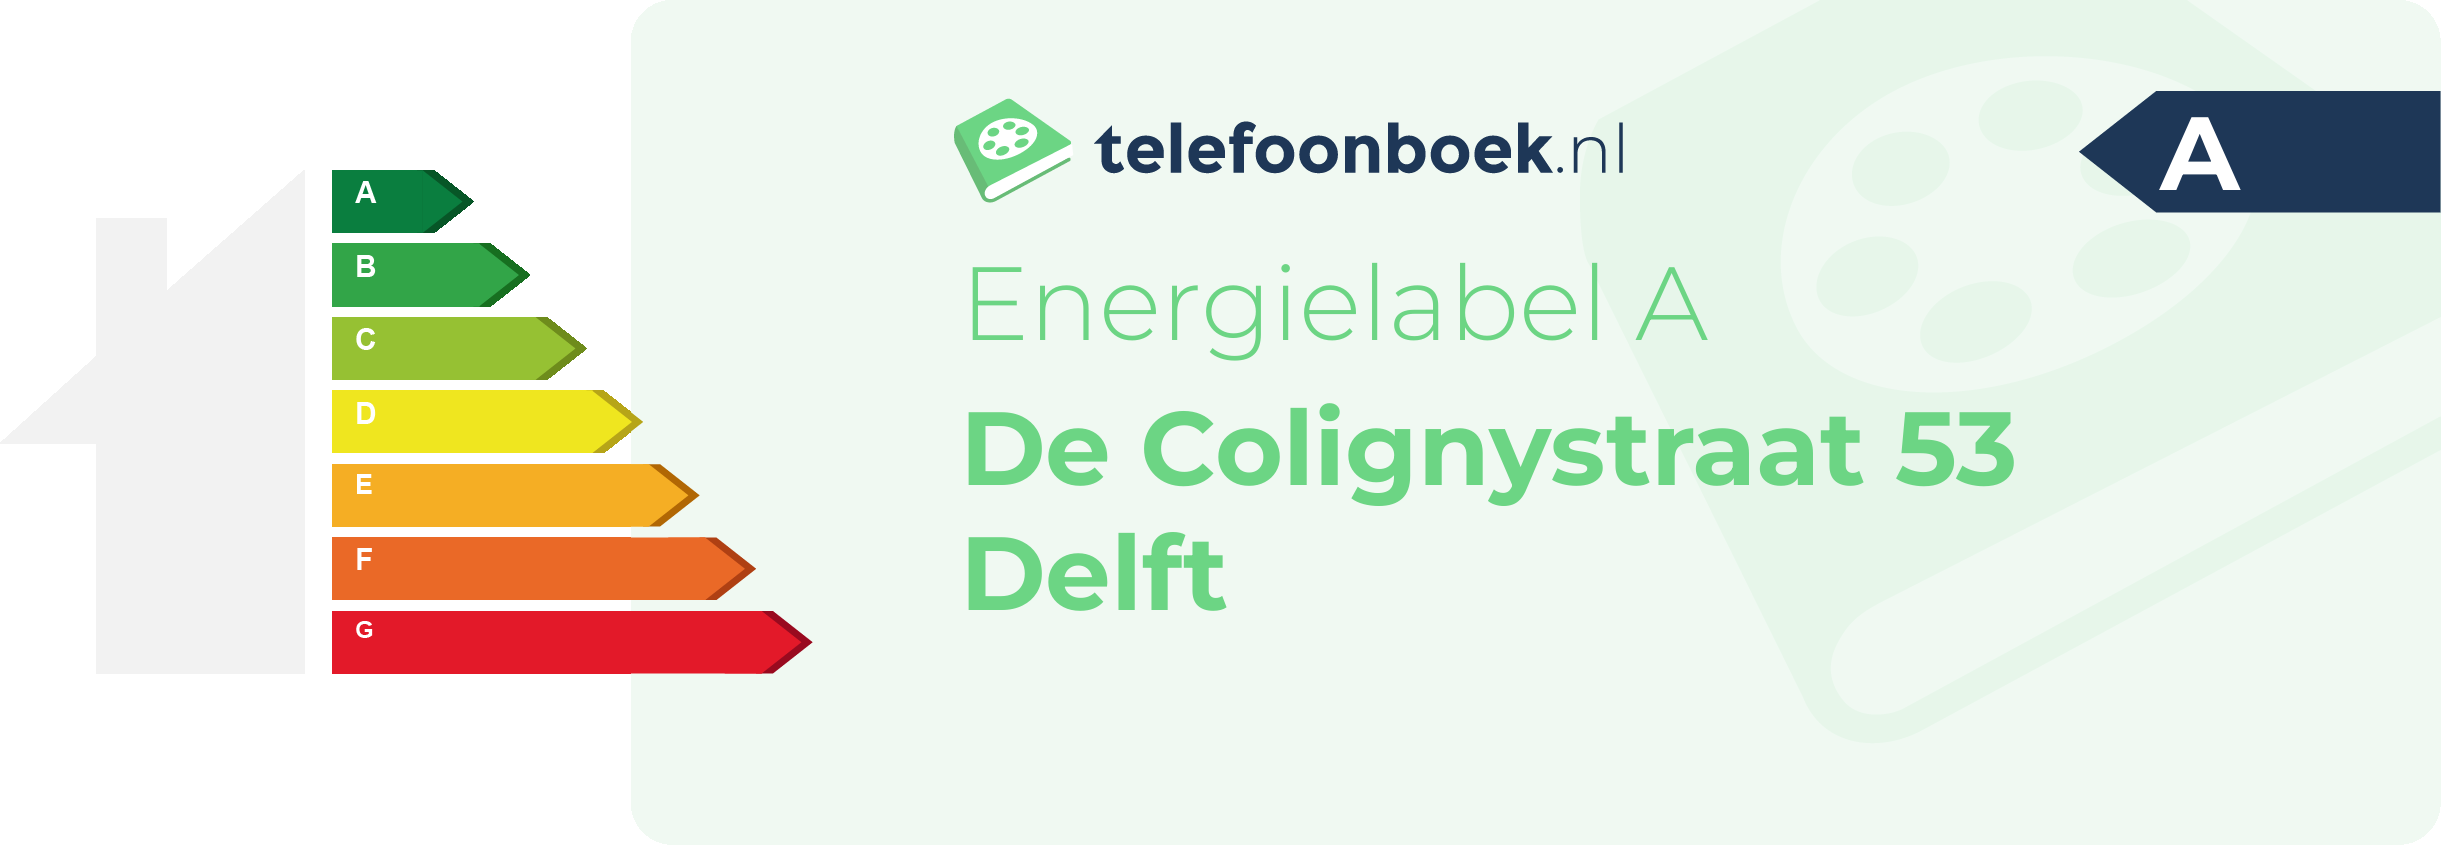 Energielabel De Colignystraat 53 Delft